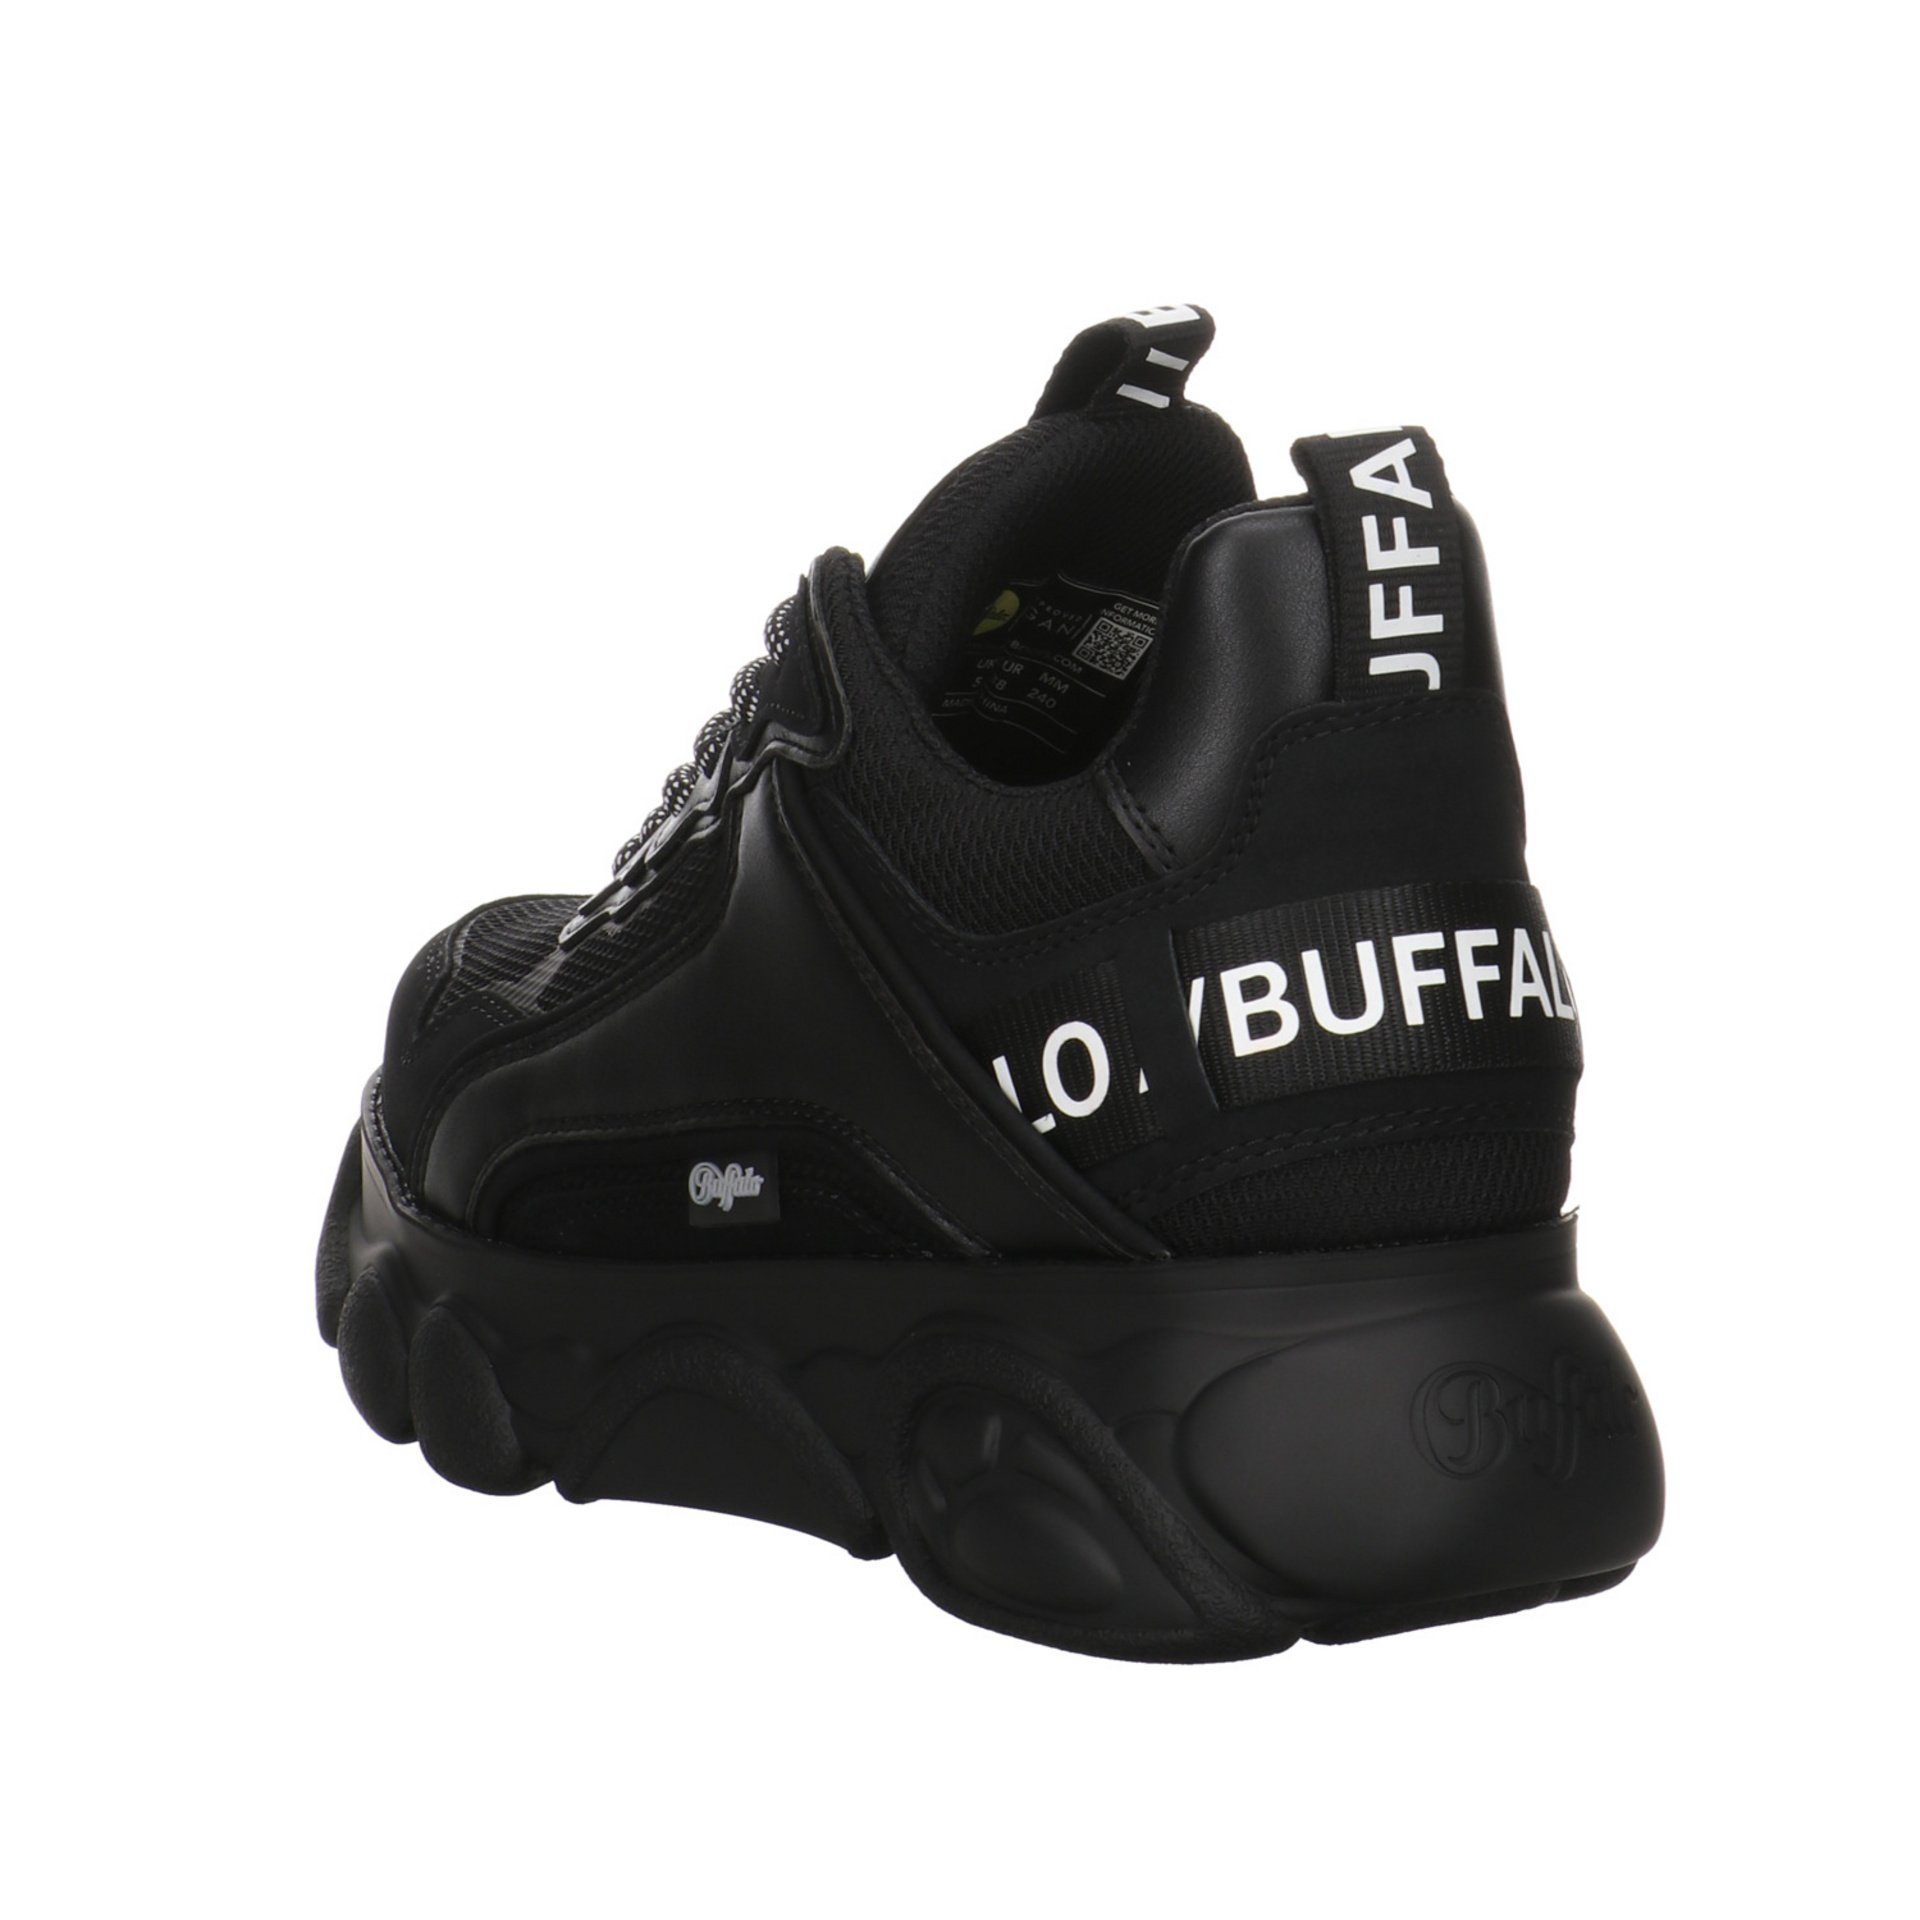 Chai Schnürstiefelette Stiefeletten Damen Schuhe black CLD Buffalo Boots Synthetikkombination